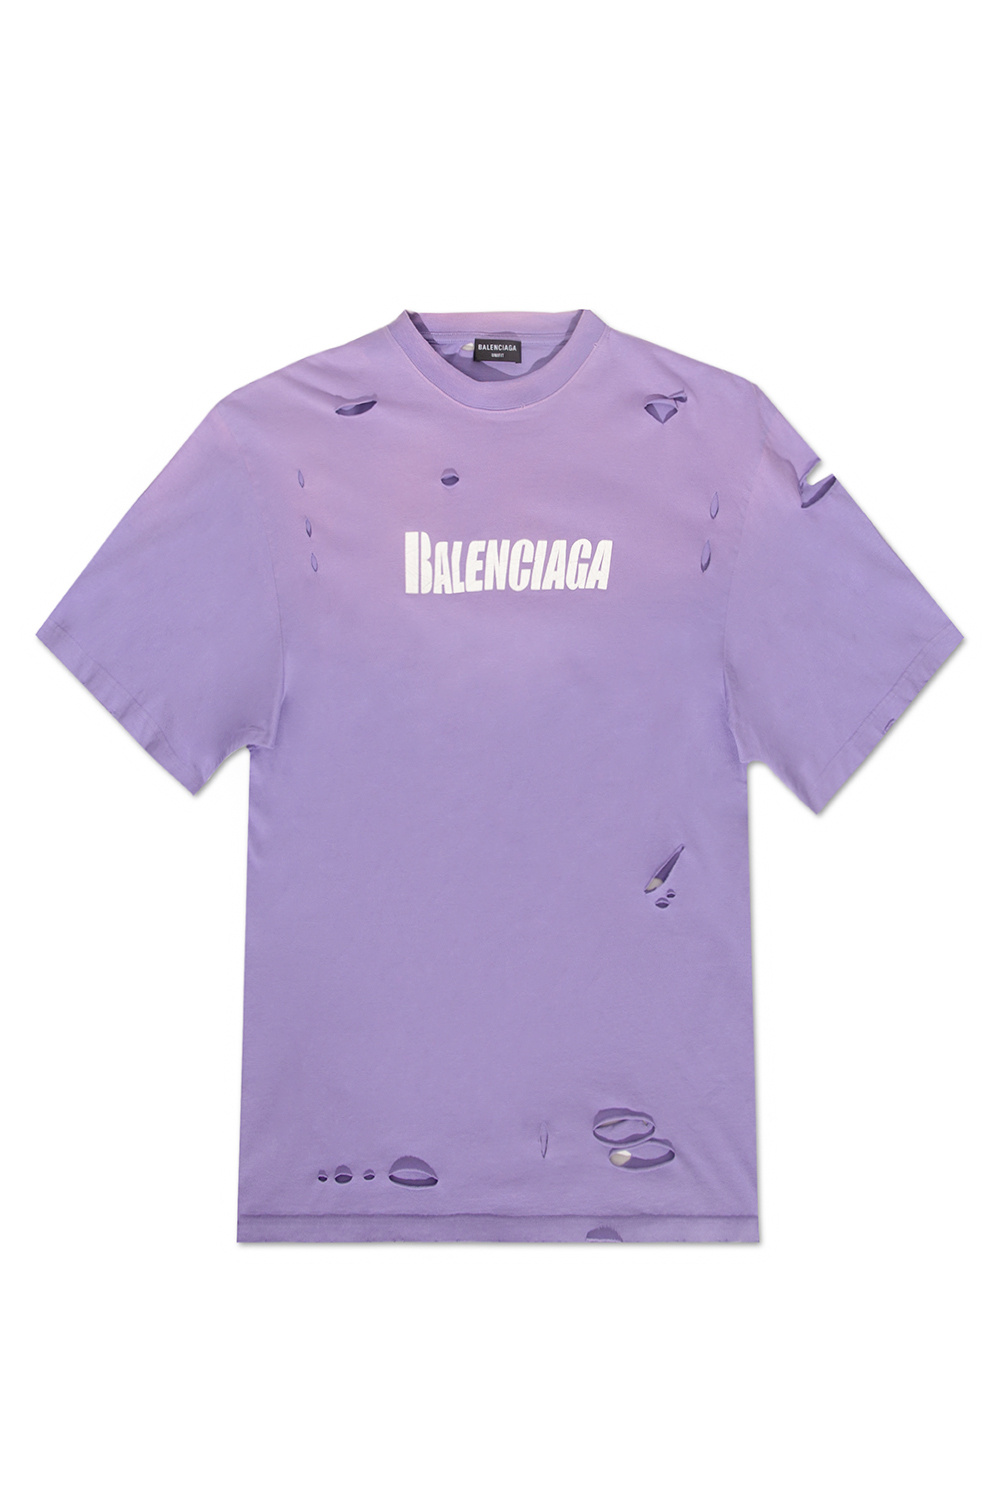 Balenciaga T-shirt Fleece with faded effect